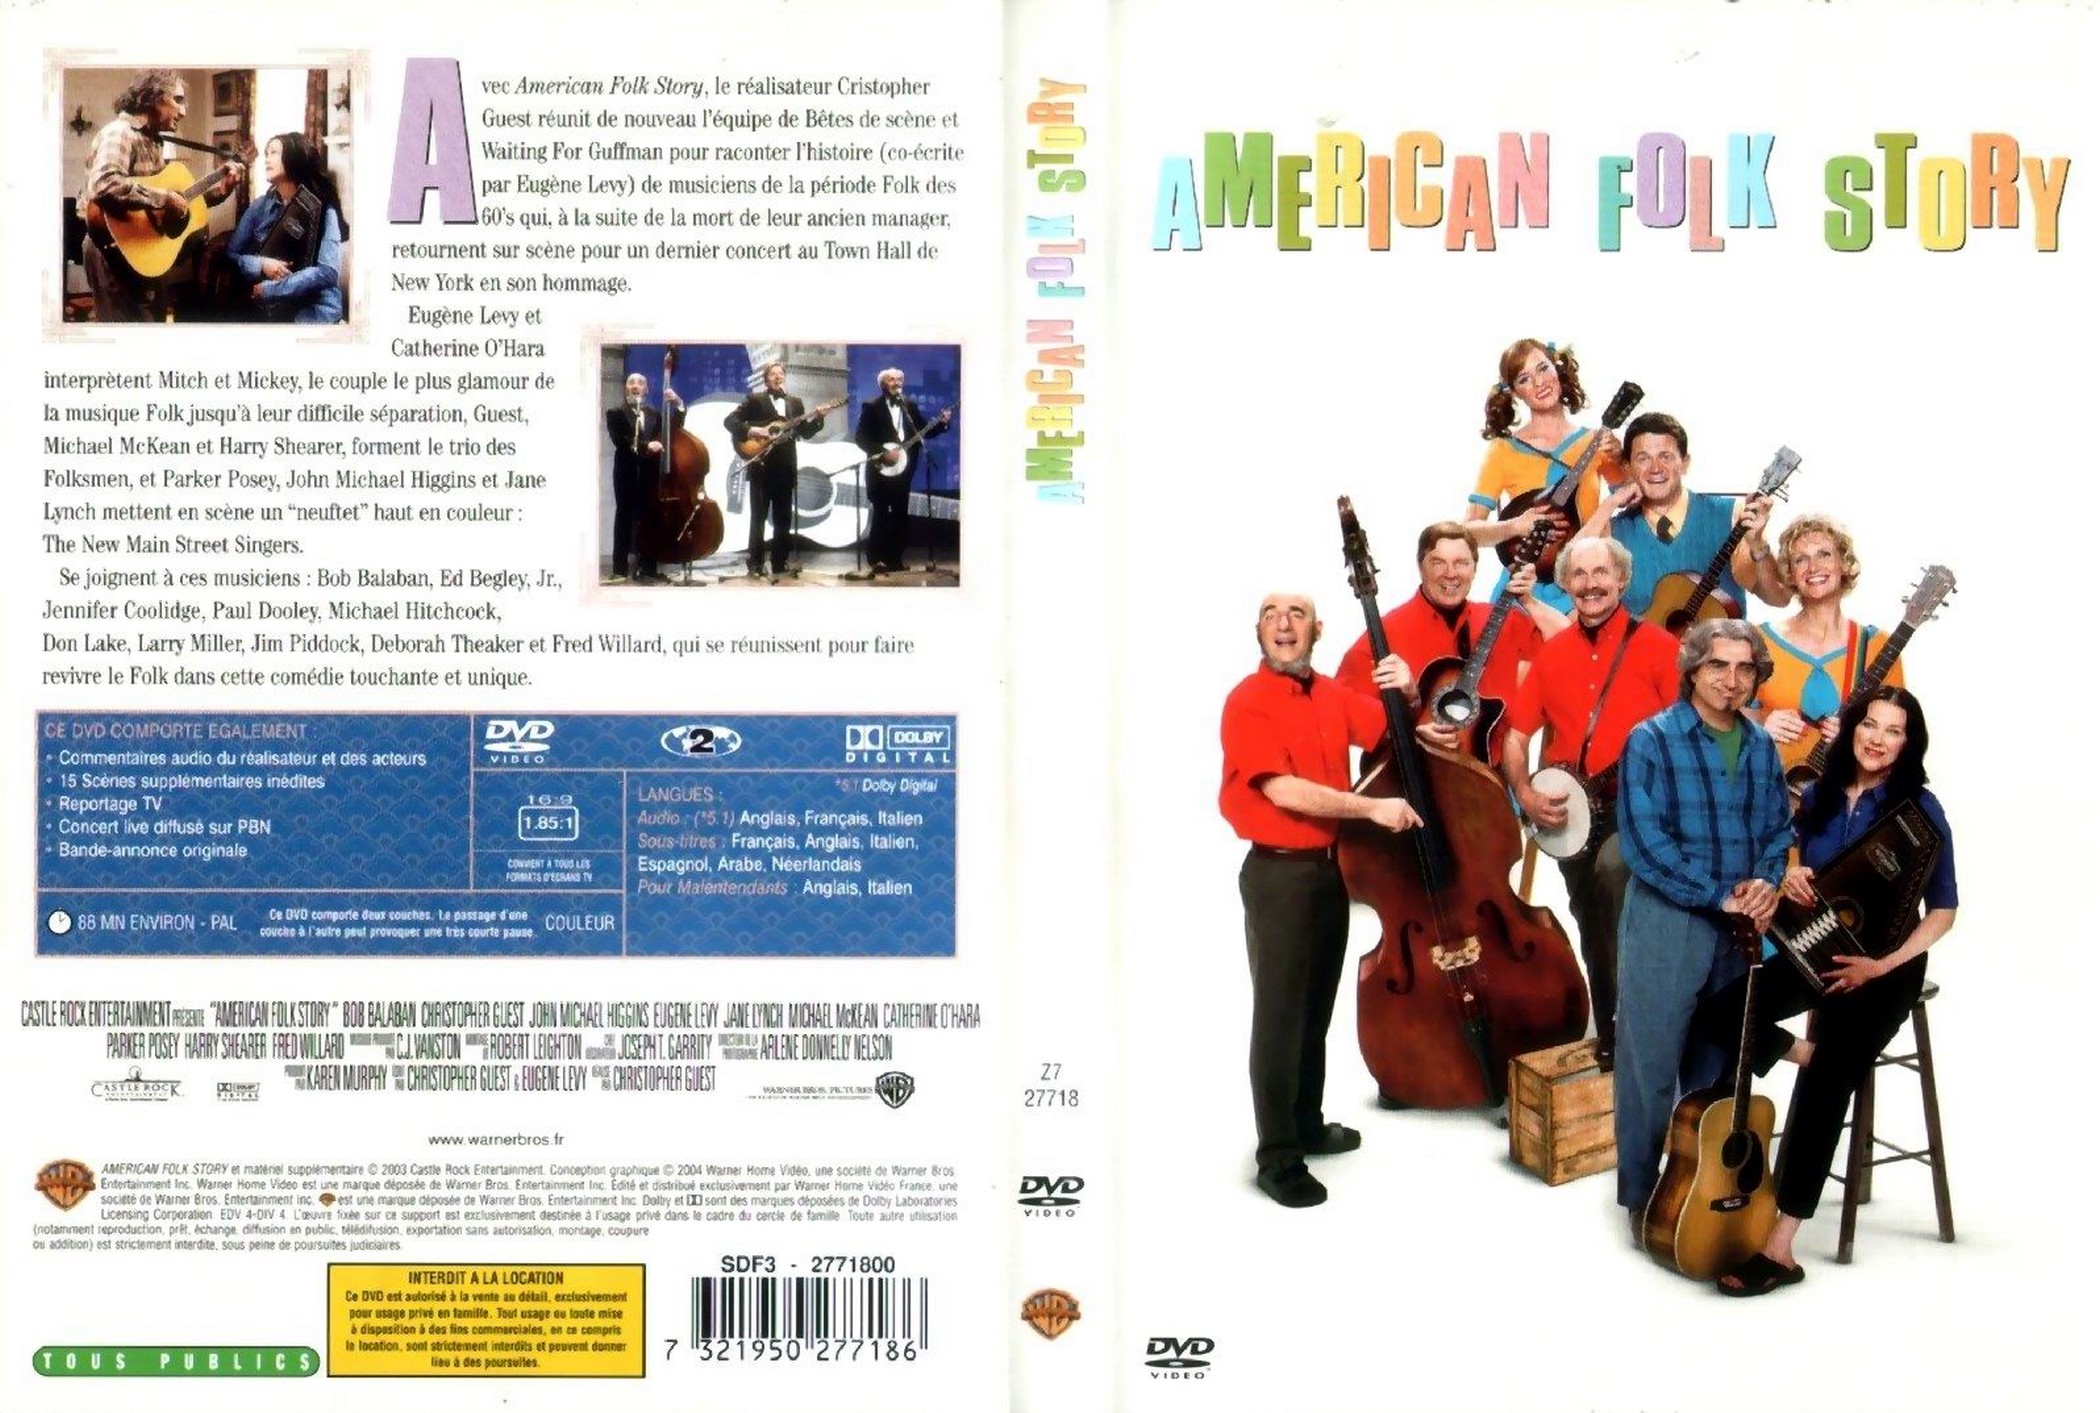 Jaquette DVD American folk story